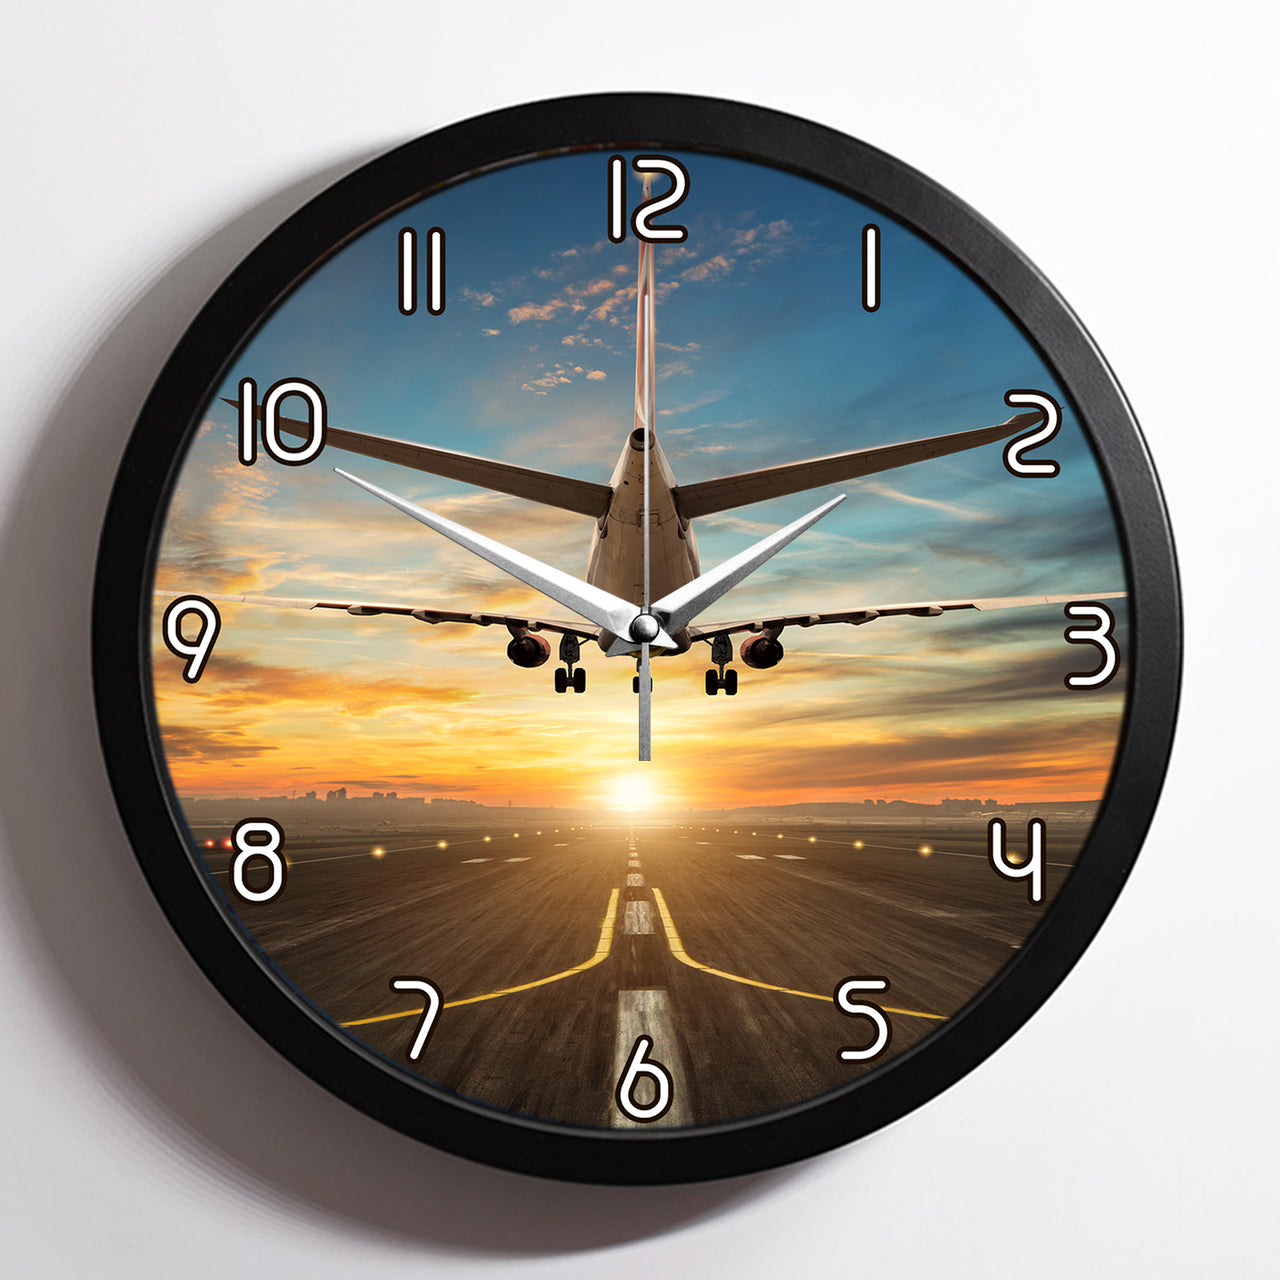 Airplane over Runway Towards the Sunrise Designed Wall Clocks